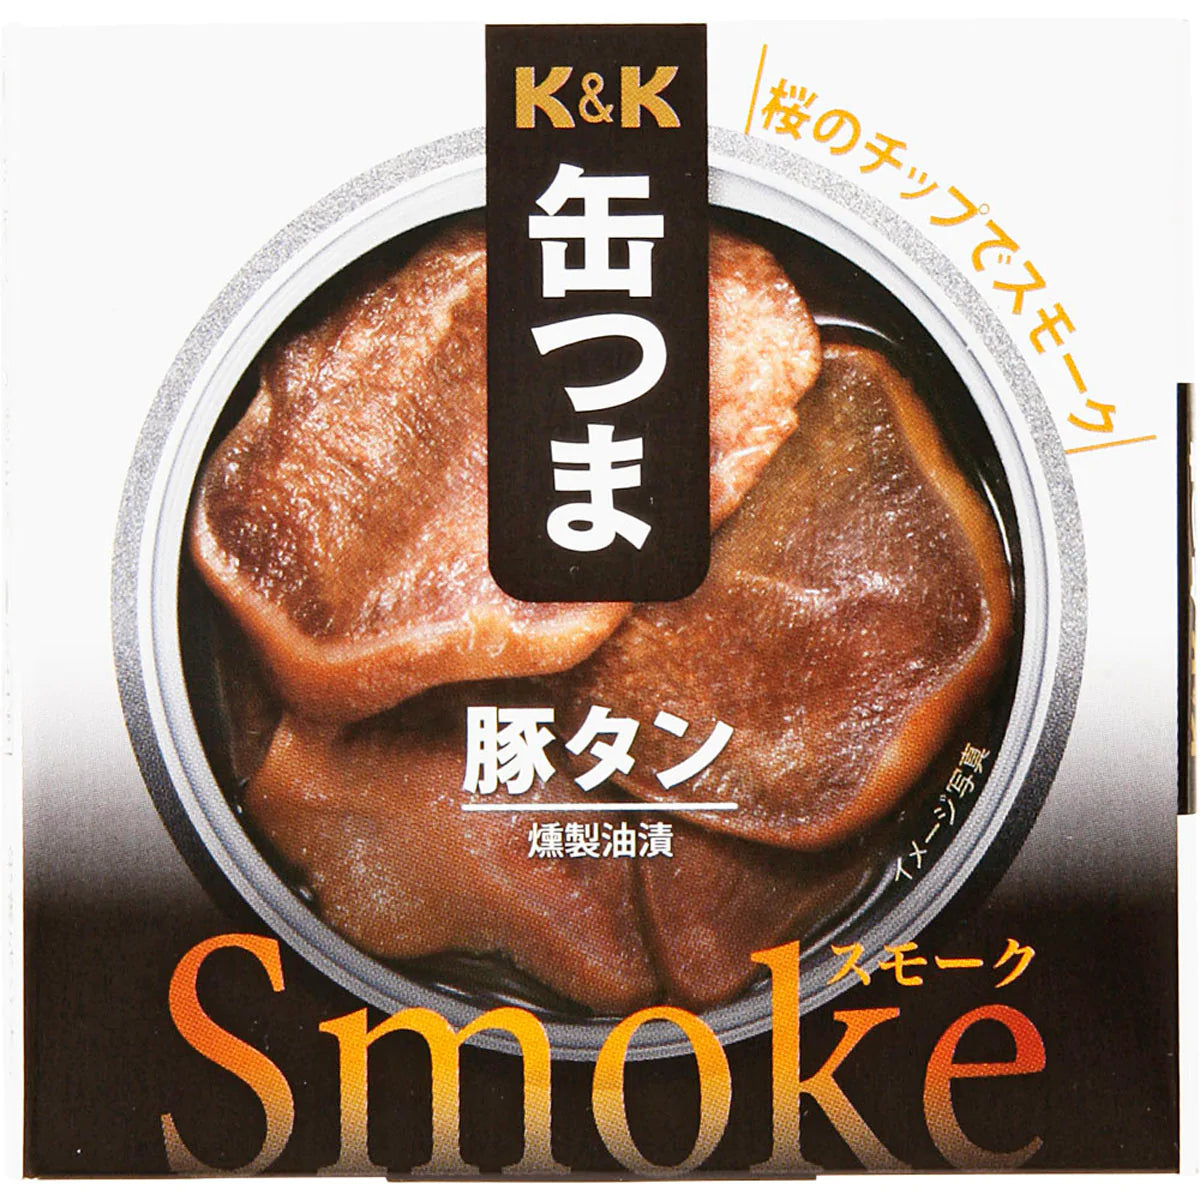 Preserved　Pork　–　Sauce　Smoke　Oil　KANTSUMA　Japa　Food　Canned　Snack　Tongues　StudioTokyo